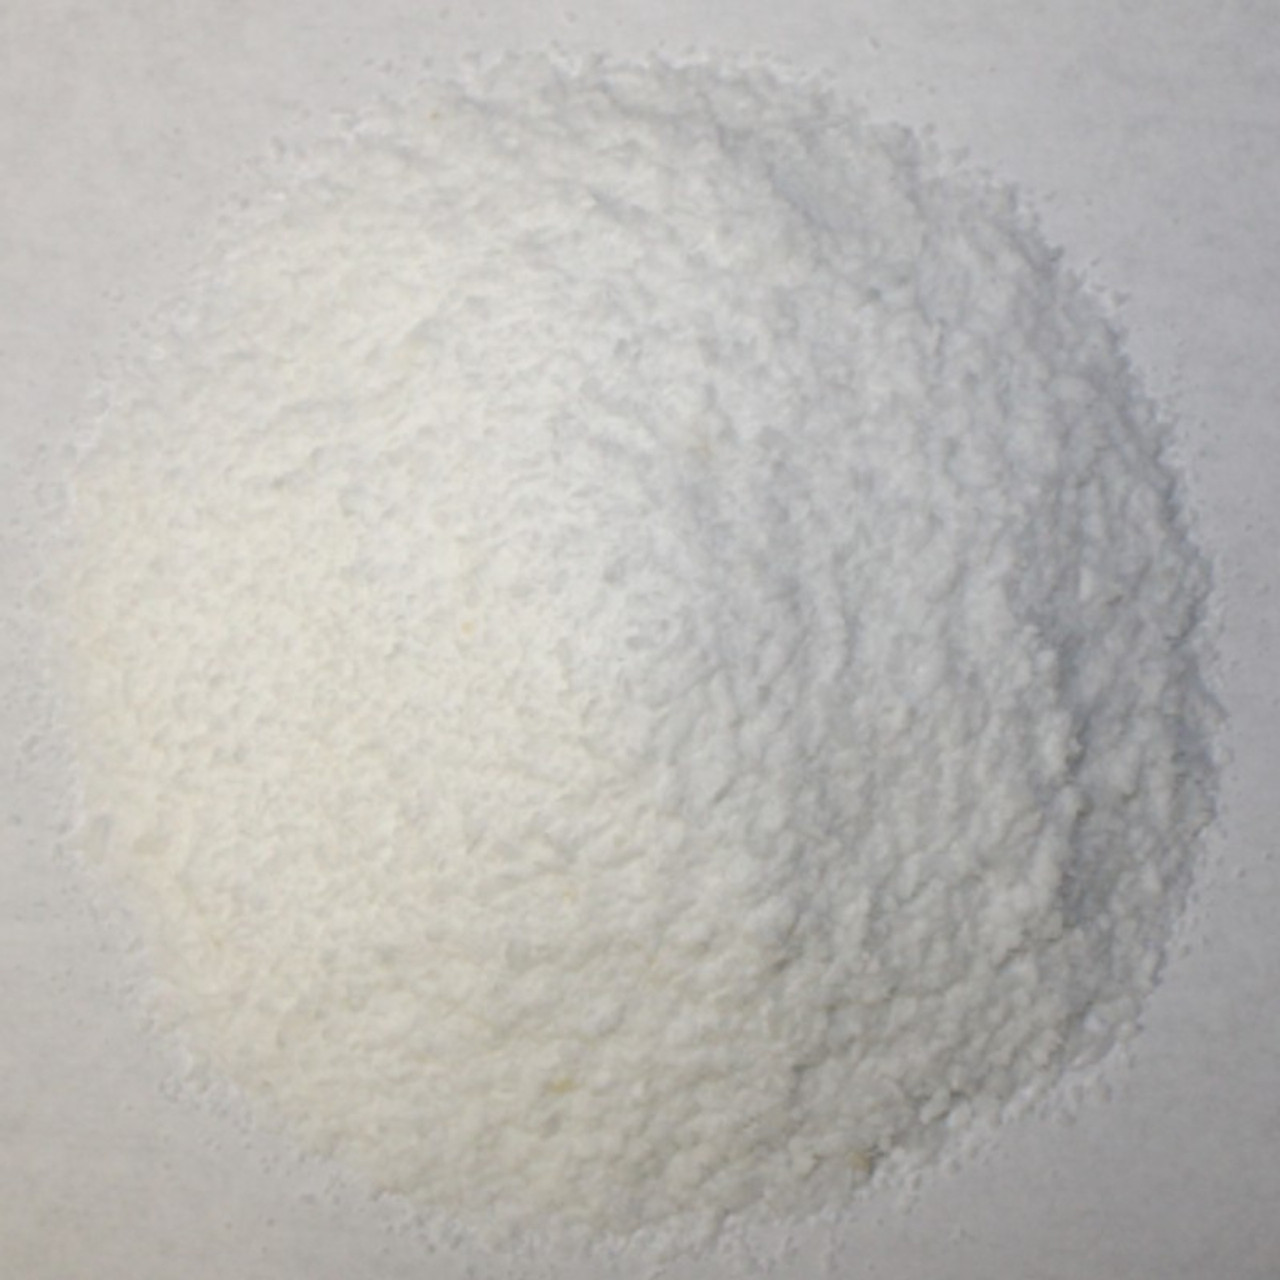 Sodium Lauryl Sulfoacetate (SLSA) Powder, 1 lb